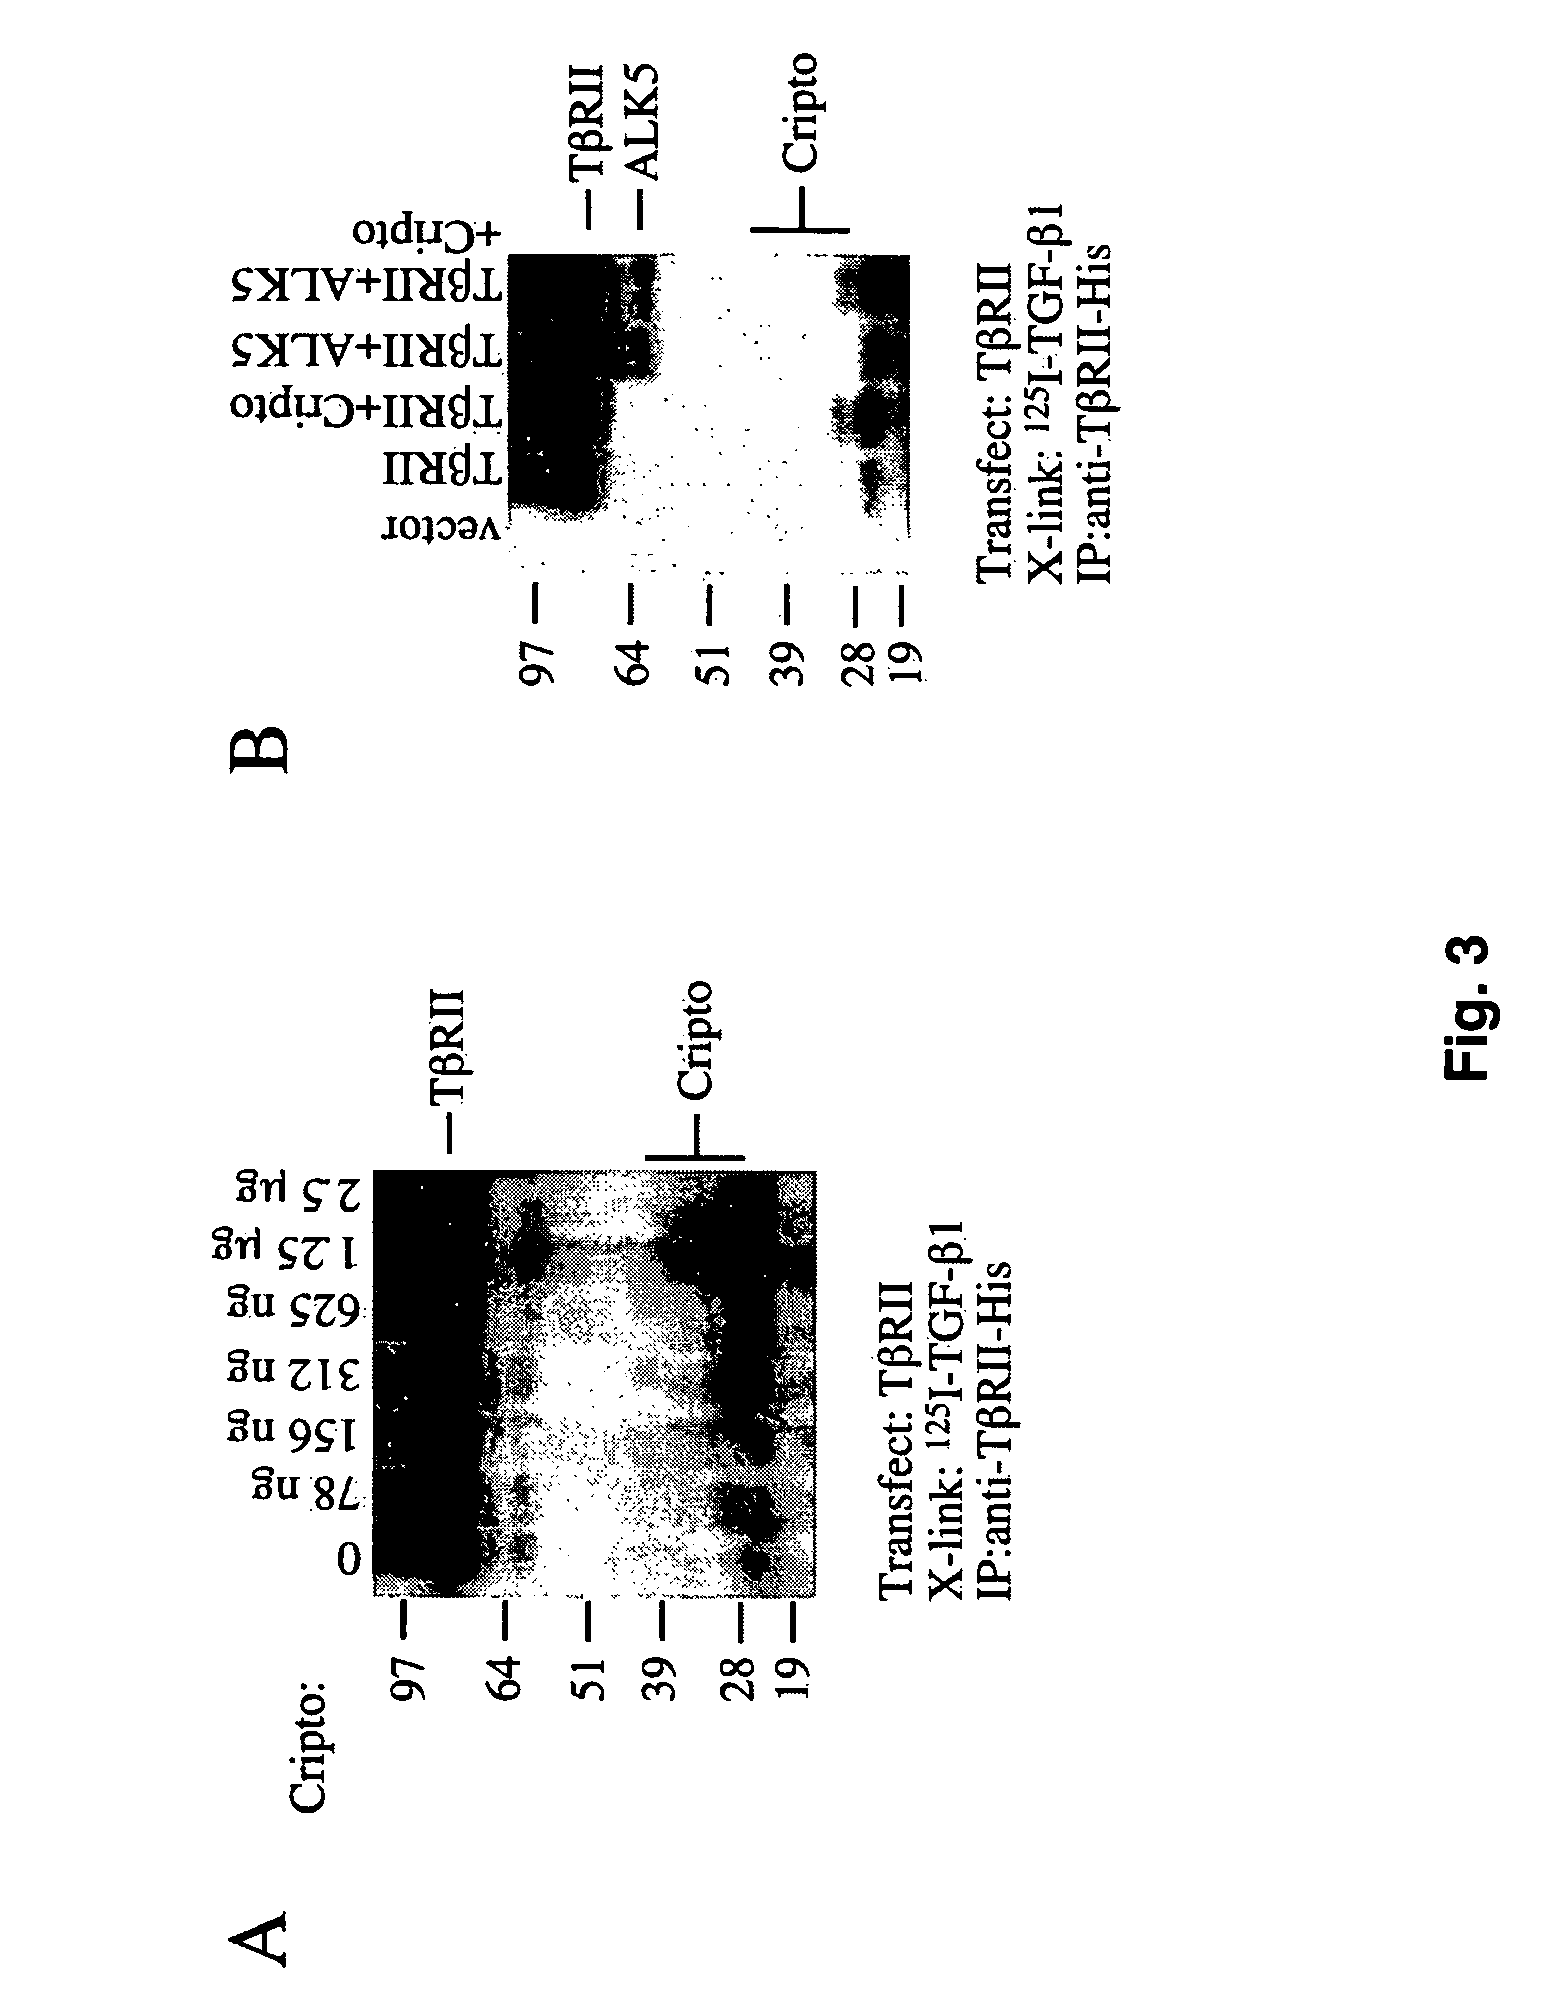 Cripto antagonism of activin and TGF-b signaling